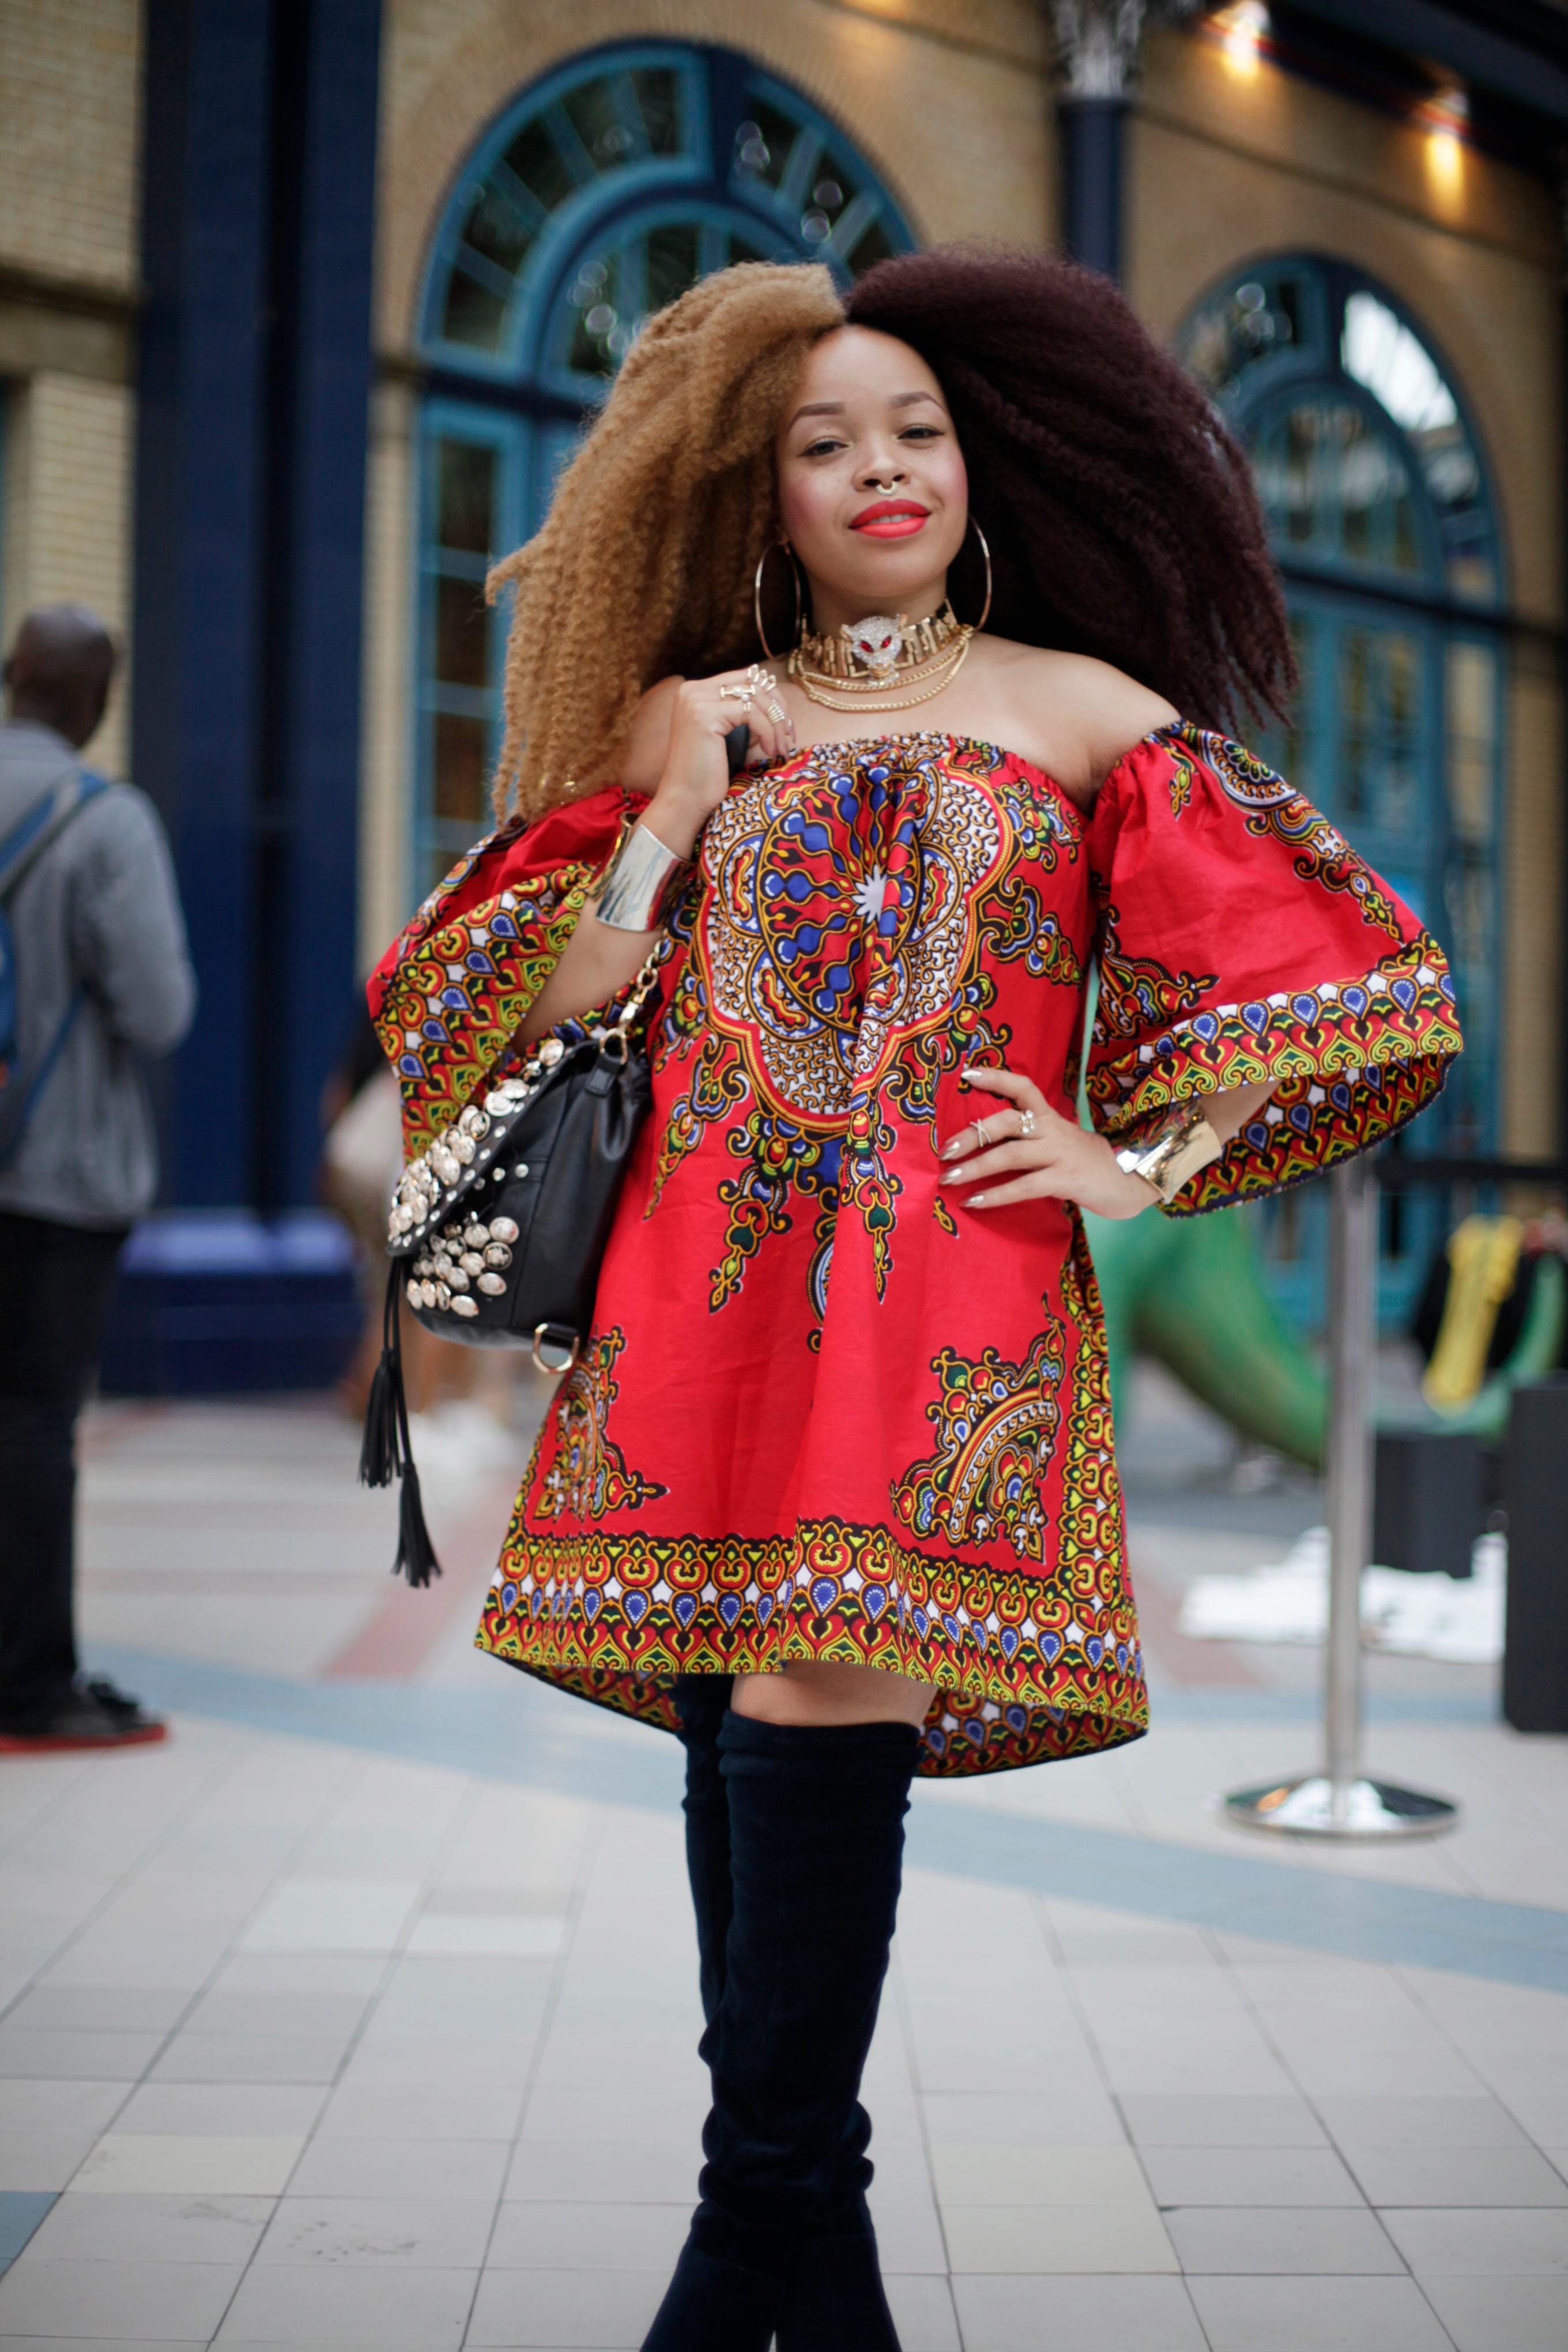 There Were so Many Beautiful Black Women at AFROPUNK London 
